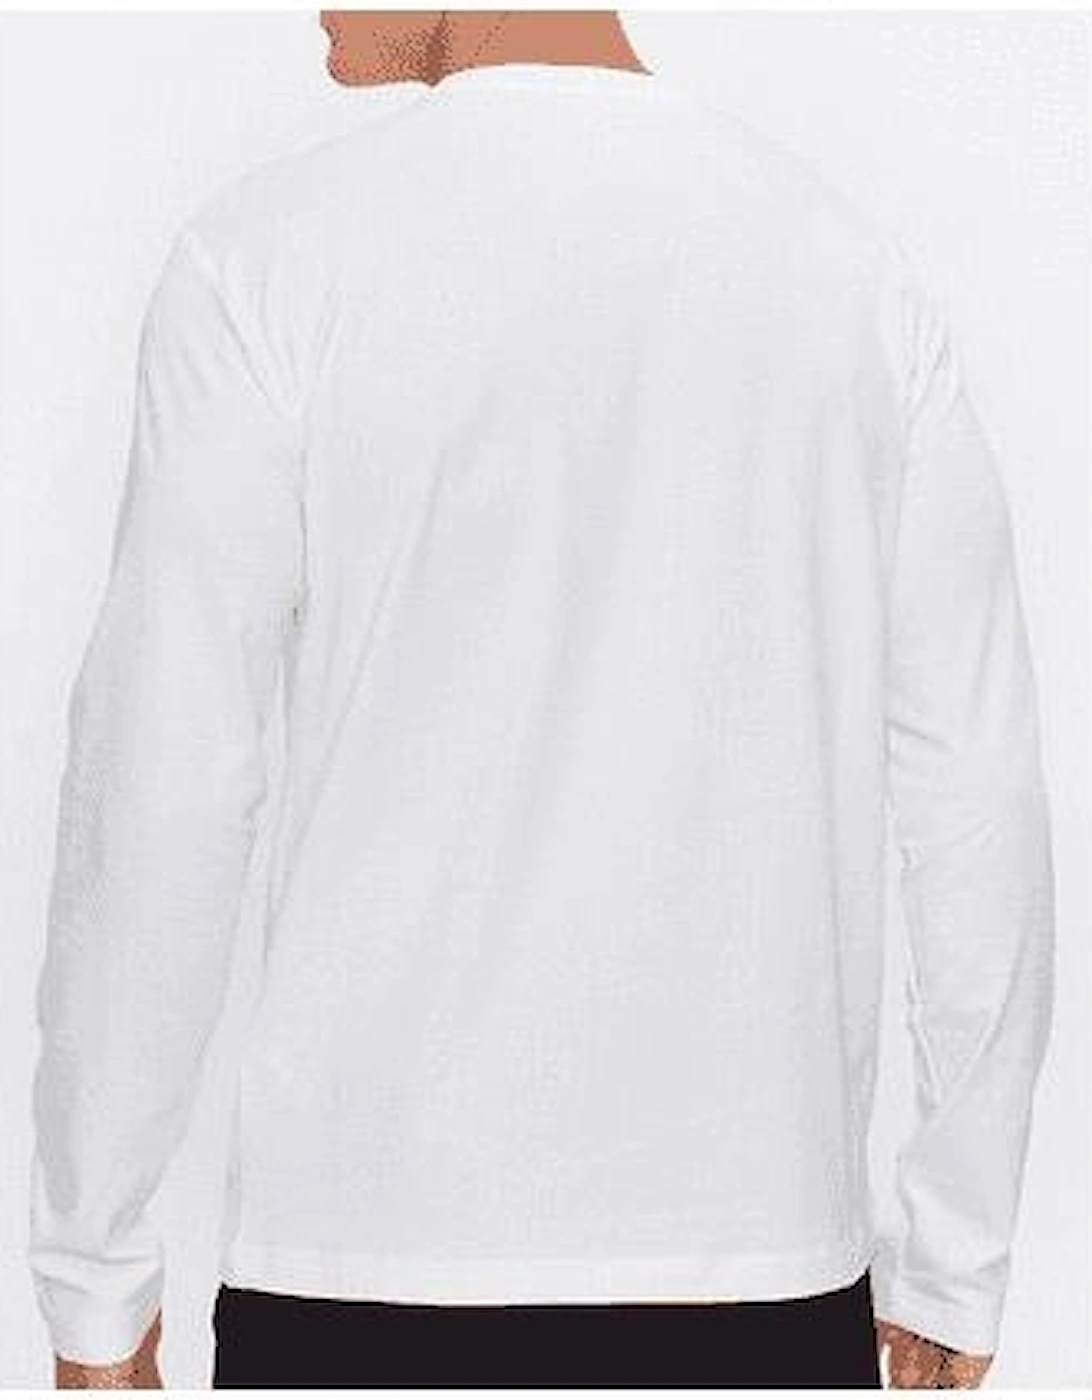 Cotton Split Logo White Long Sleeve T-Shirt